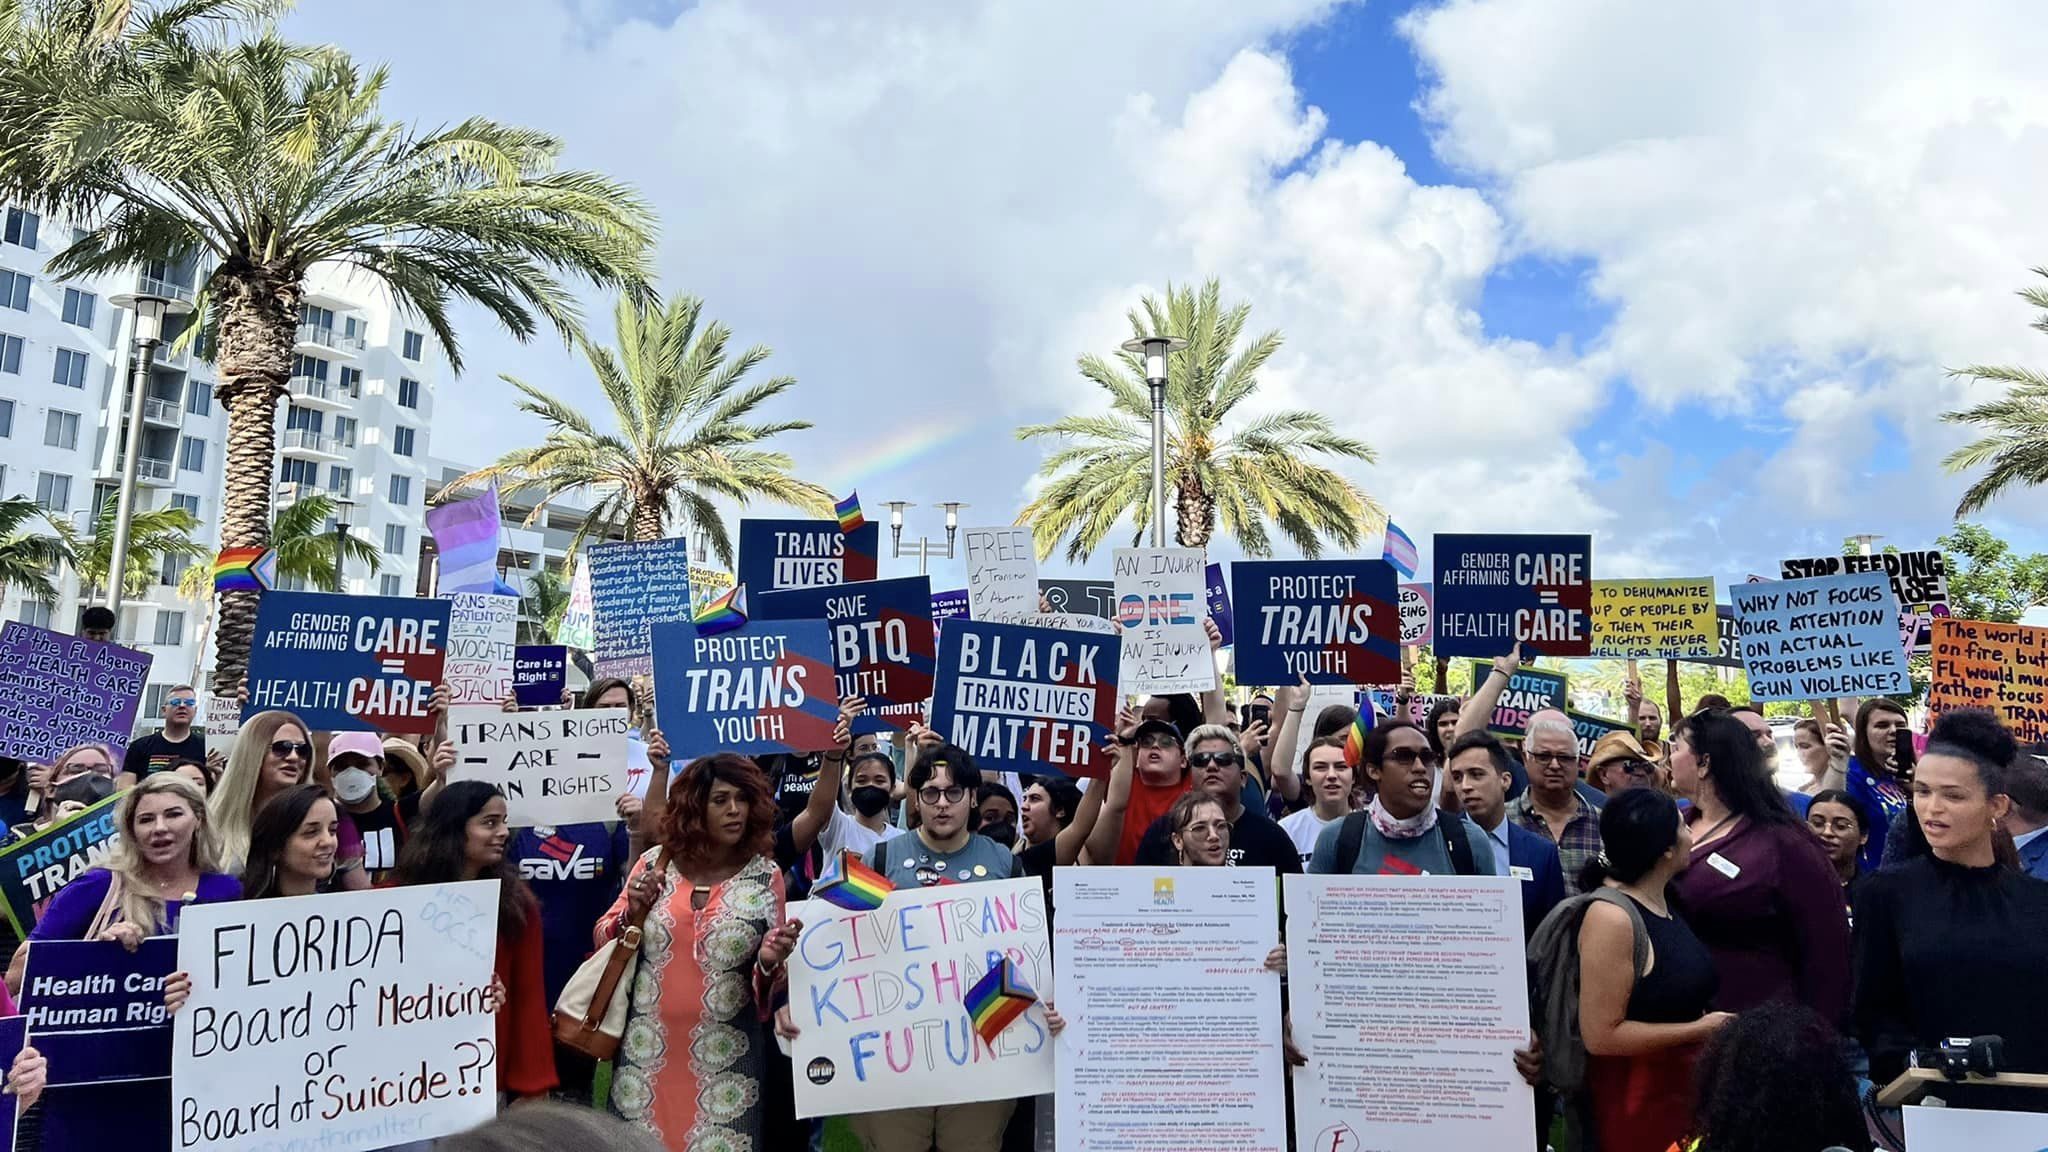 Trans Healthcare protest Aug 2022 FT Lauderdale